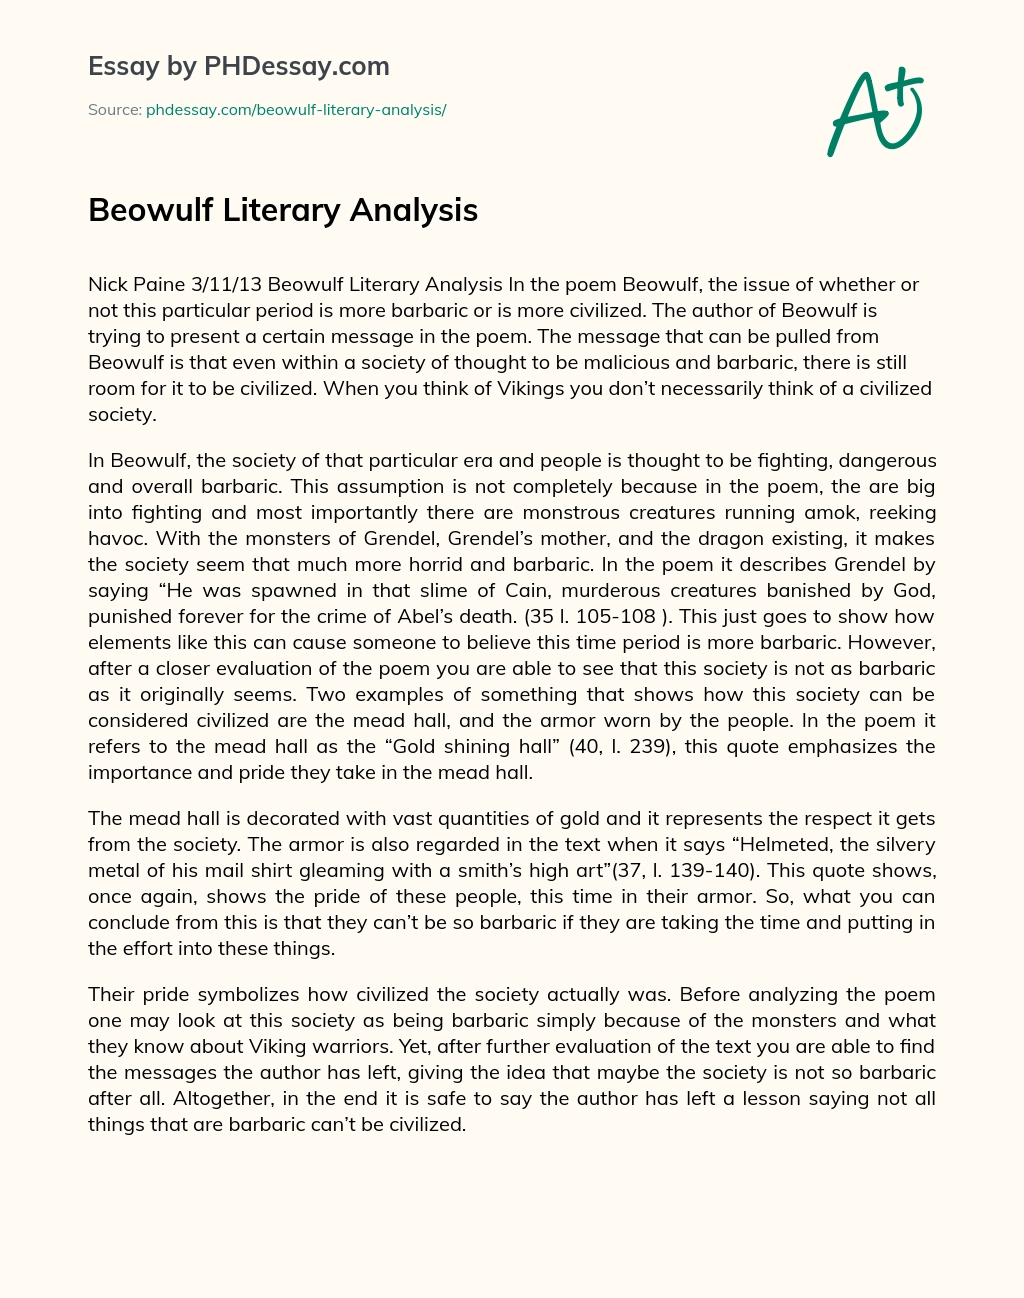 Beowulf Literary Analysis essay